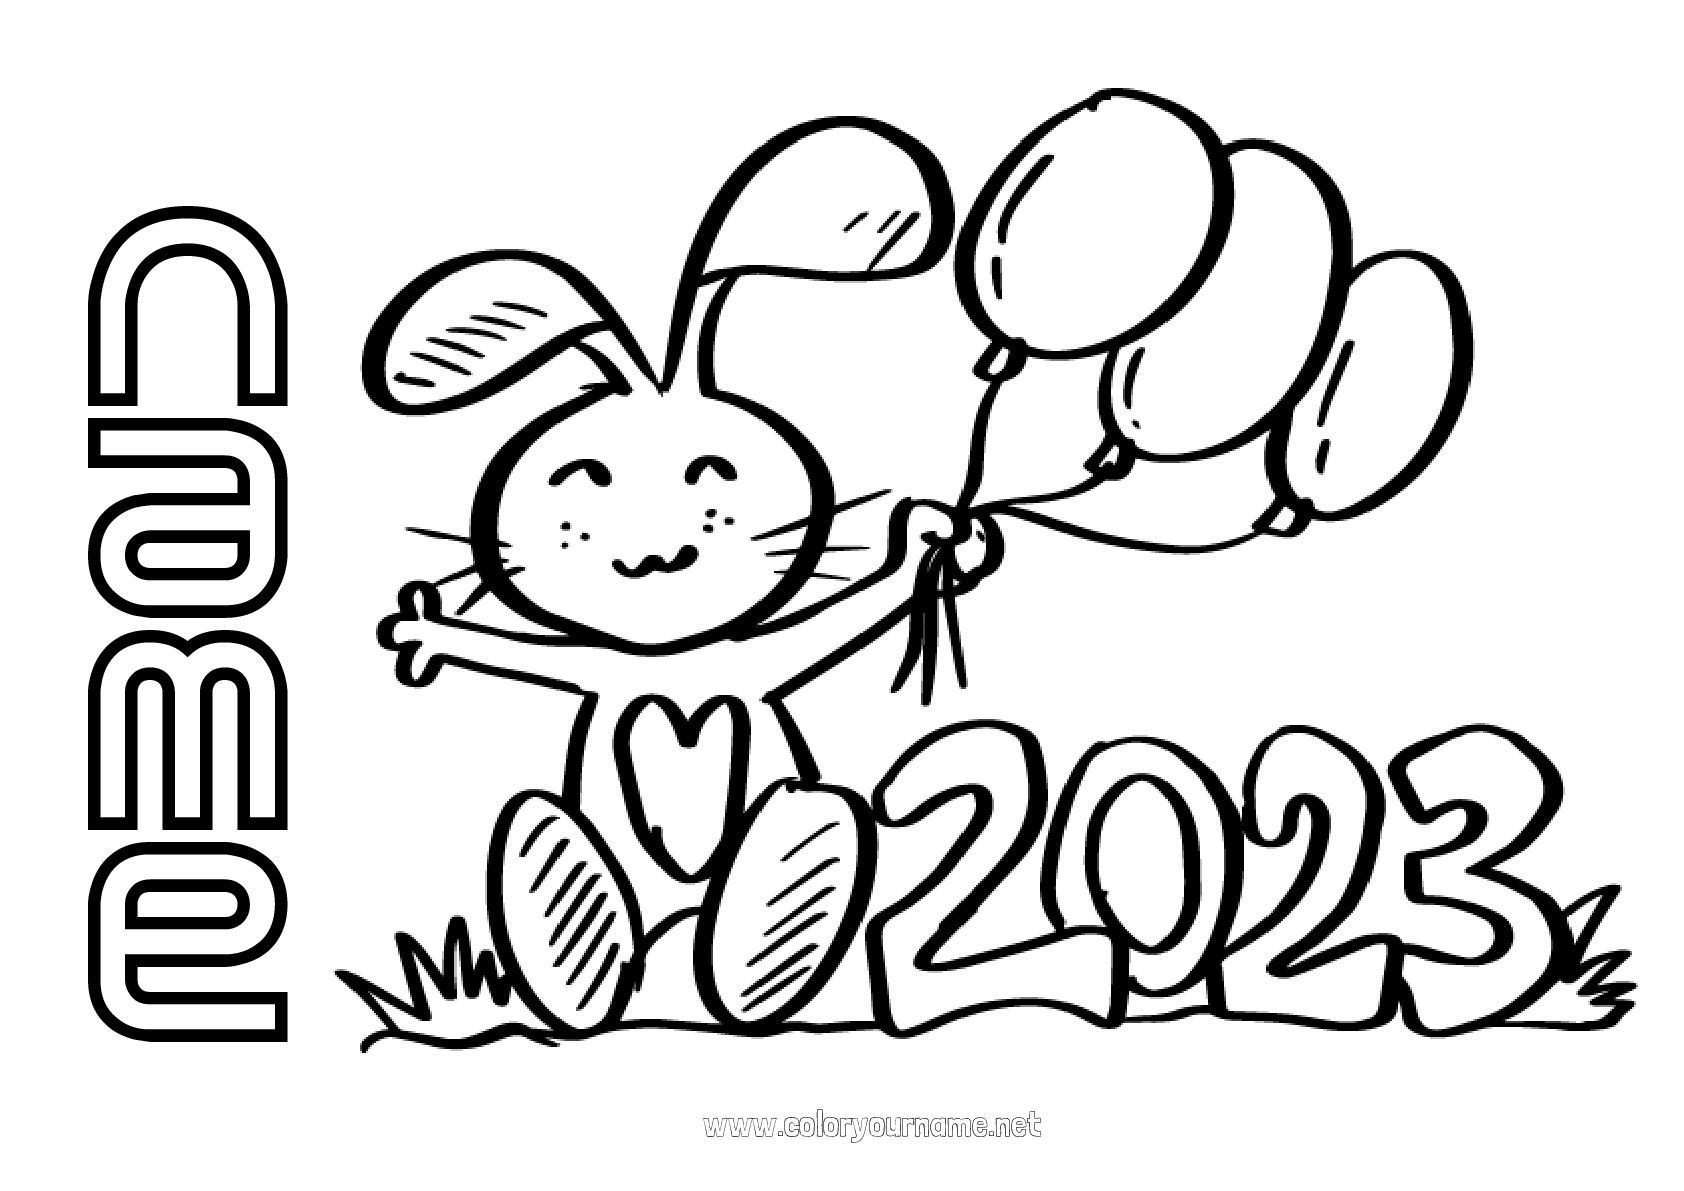 coloring-page-no-614-bunny-2023-chinese-new-year-vrogue